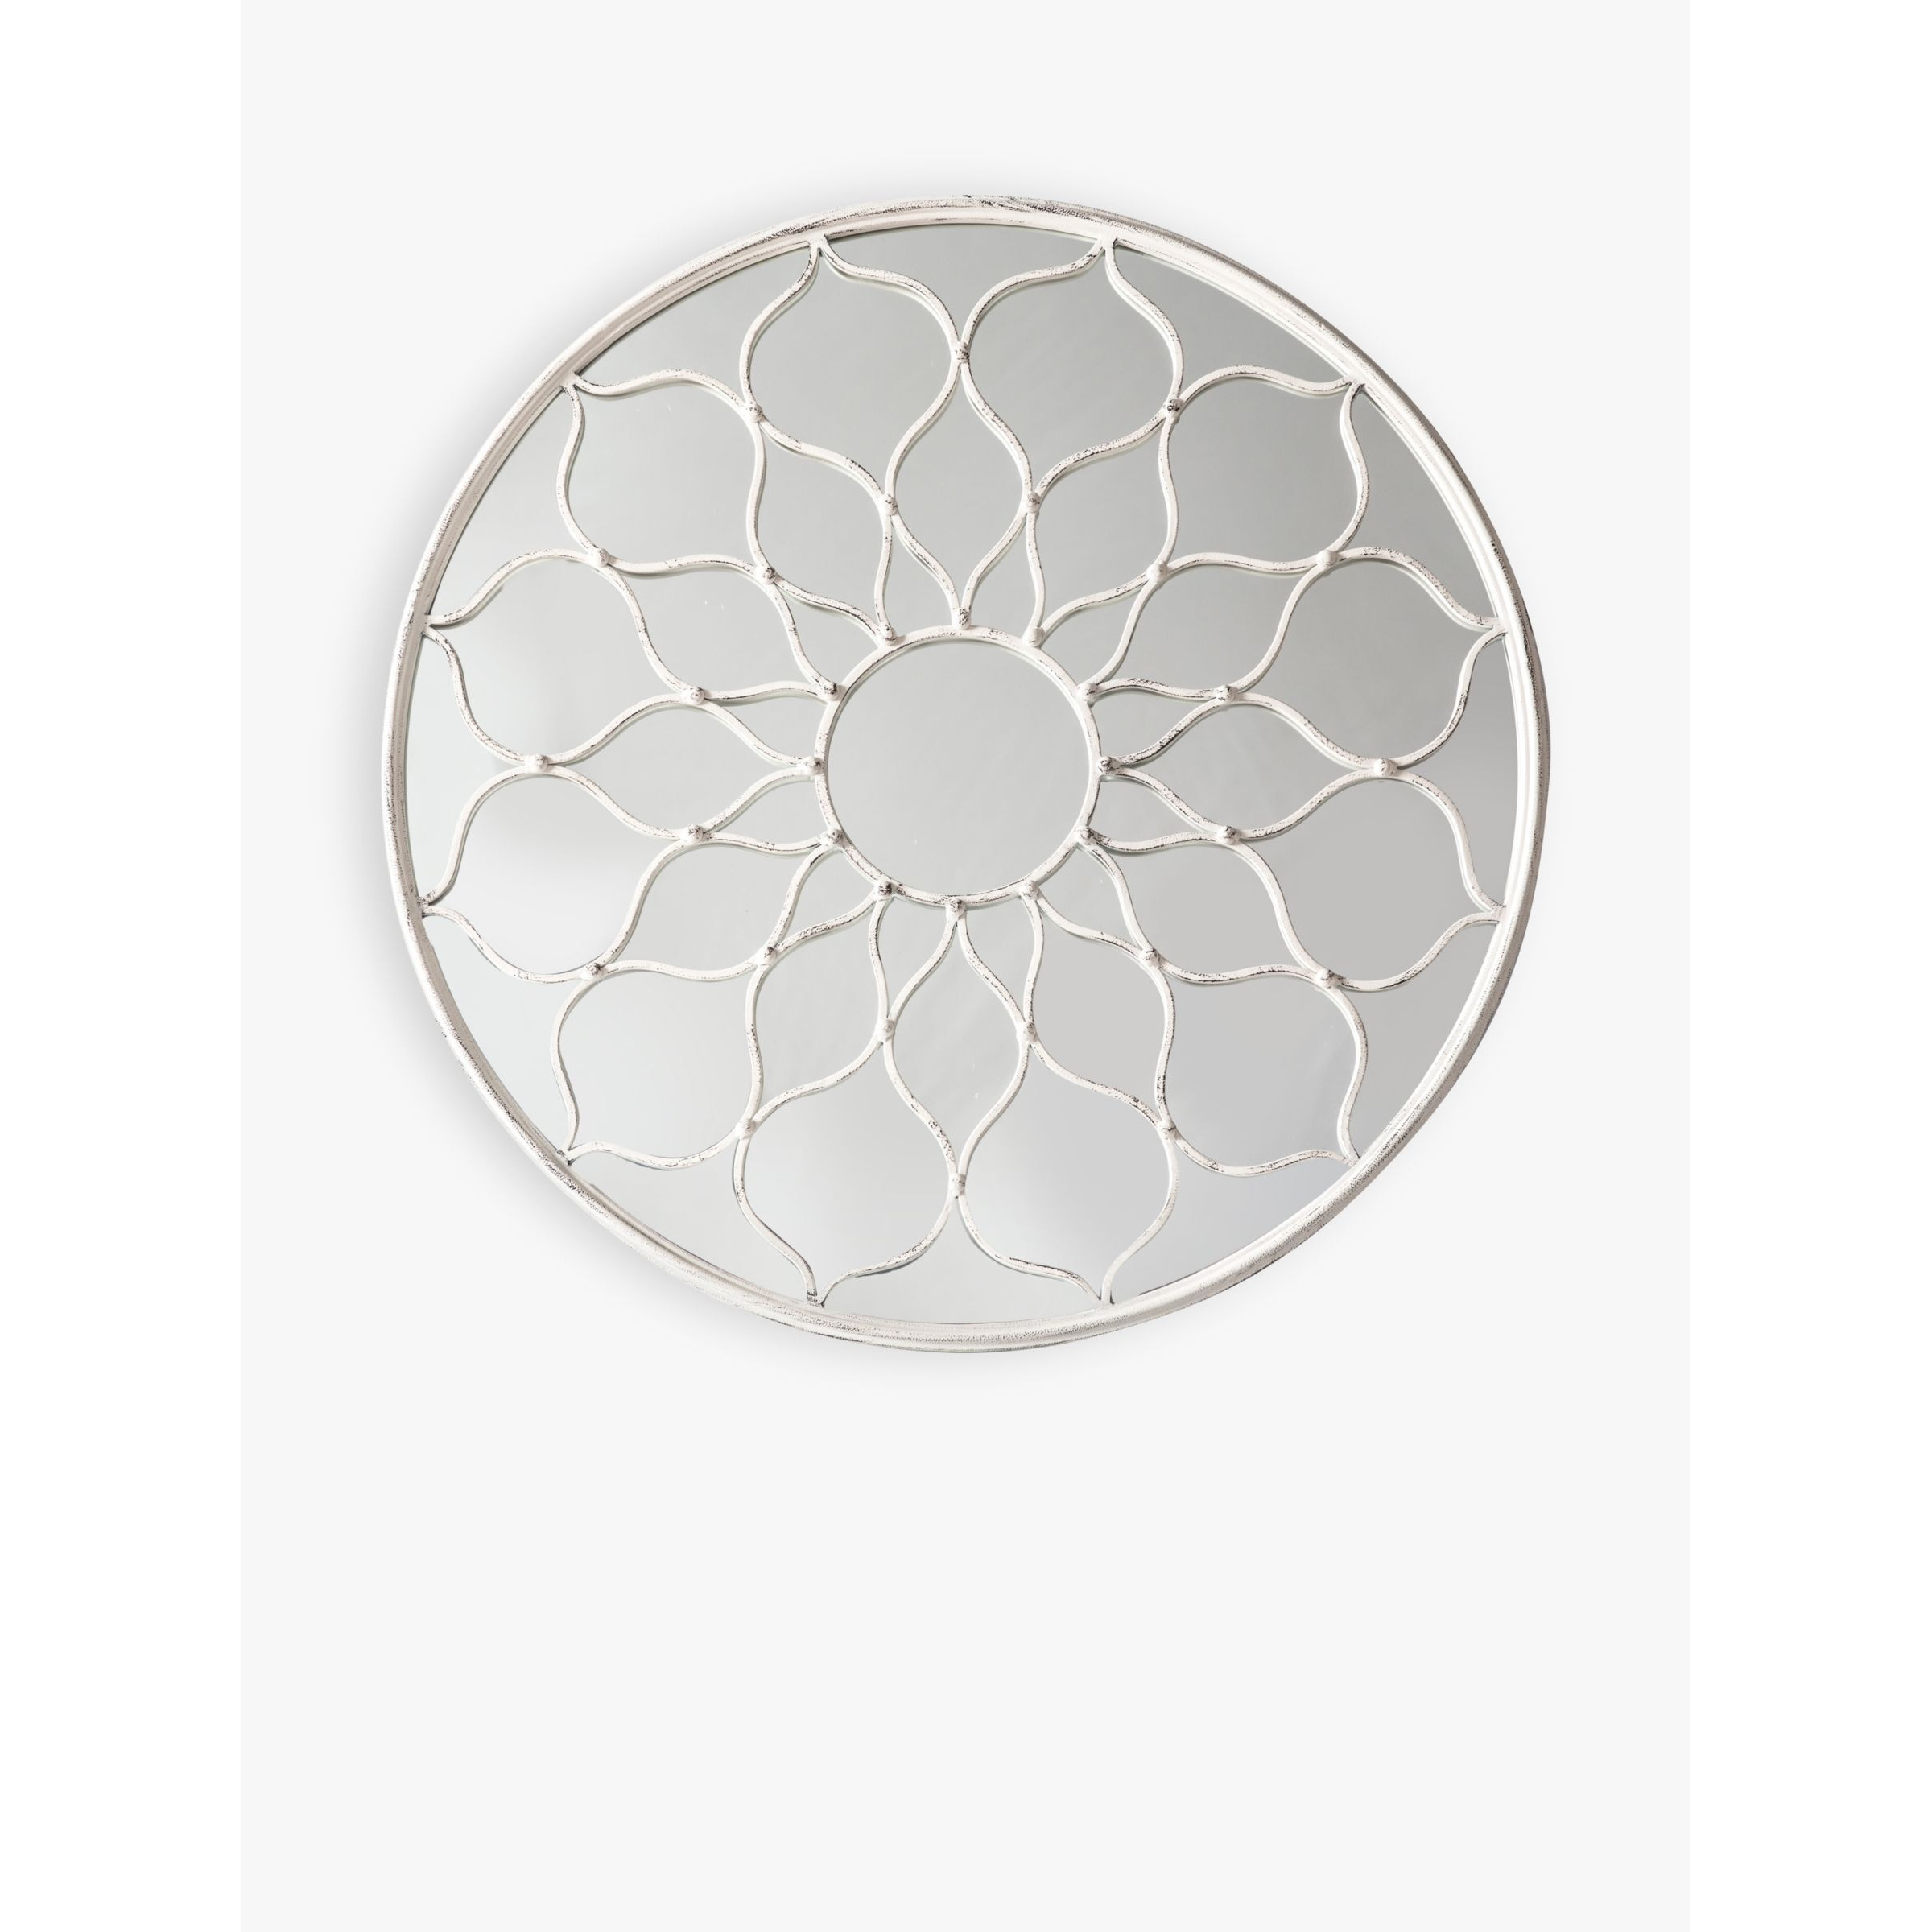 Filigree Decorative Round Metal Frame Indoor/Outdoor Wall Mirror, 84cm, White - image 1